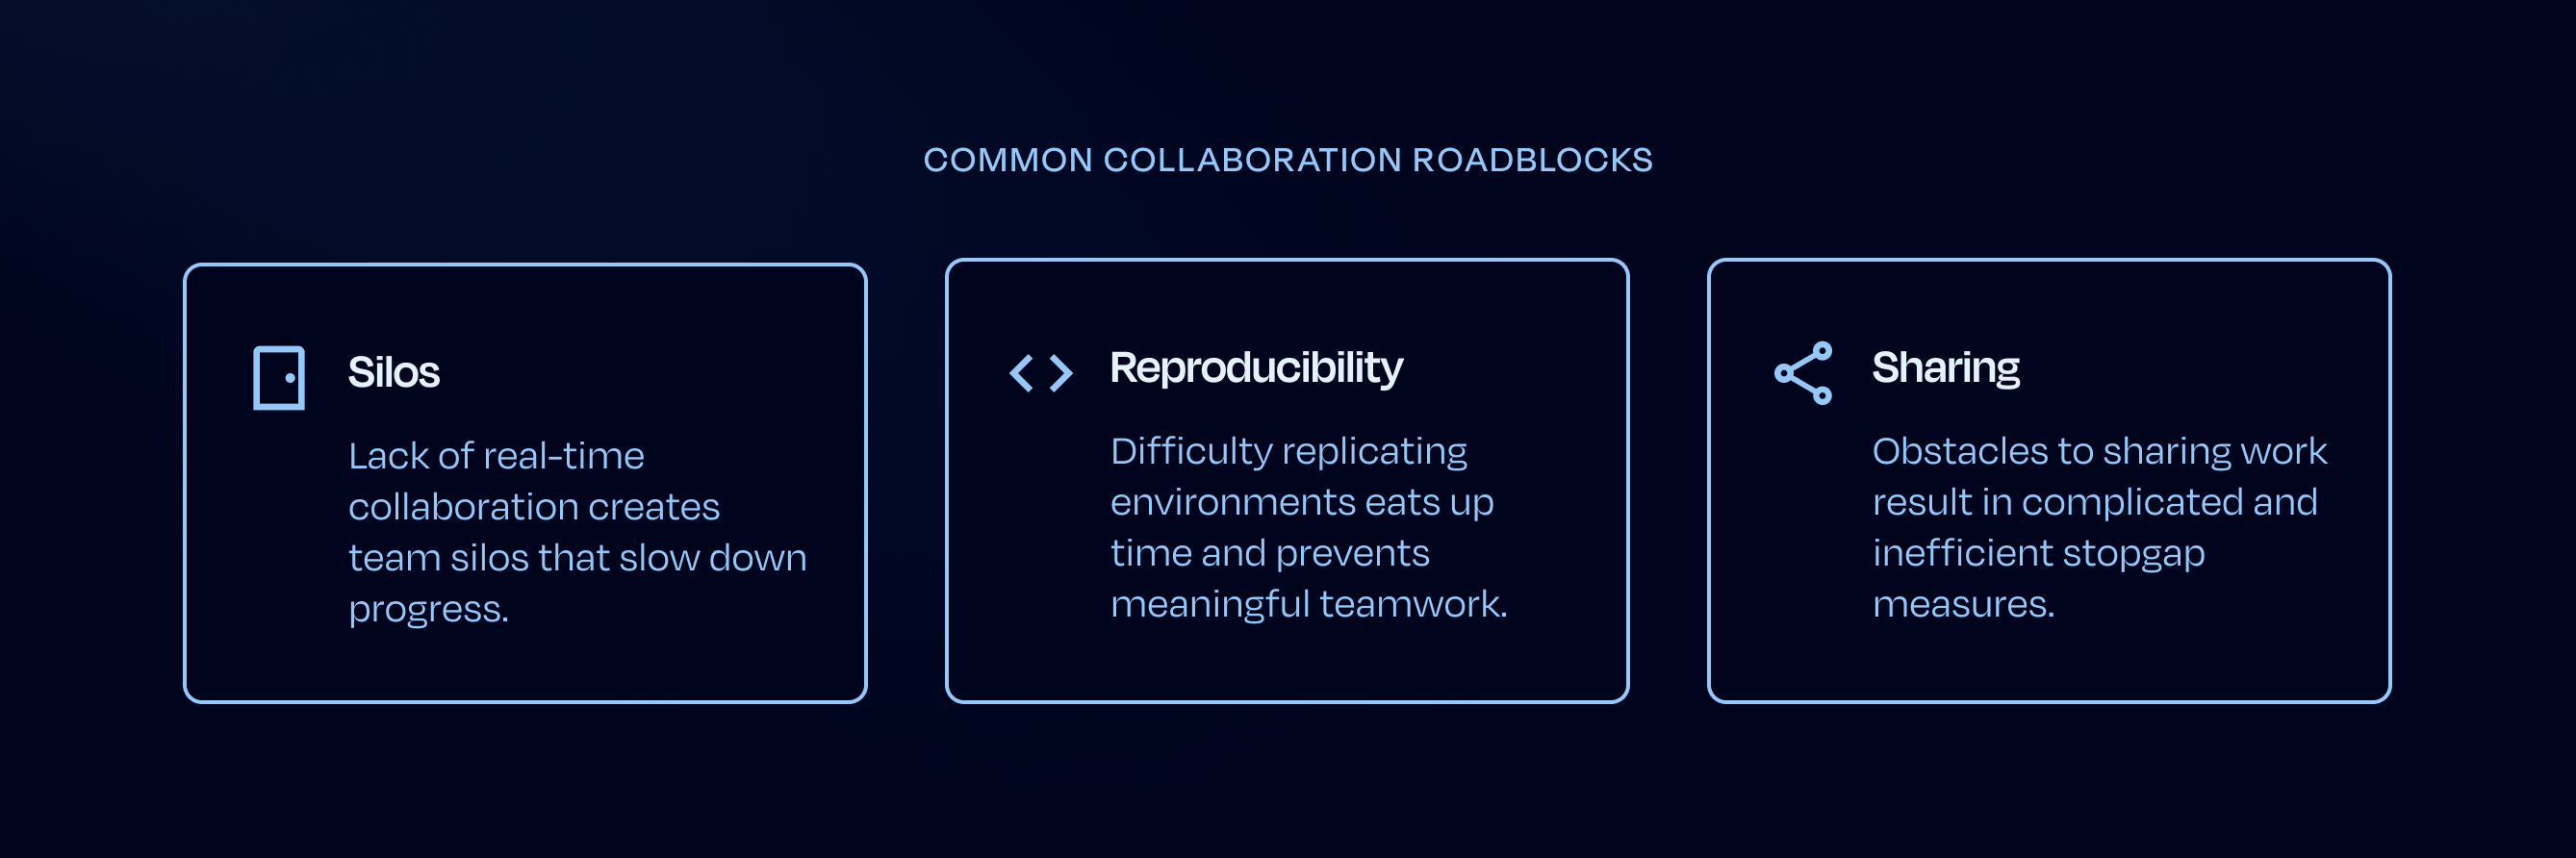 common-collaboration-roadblocks.png